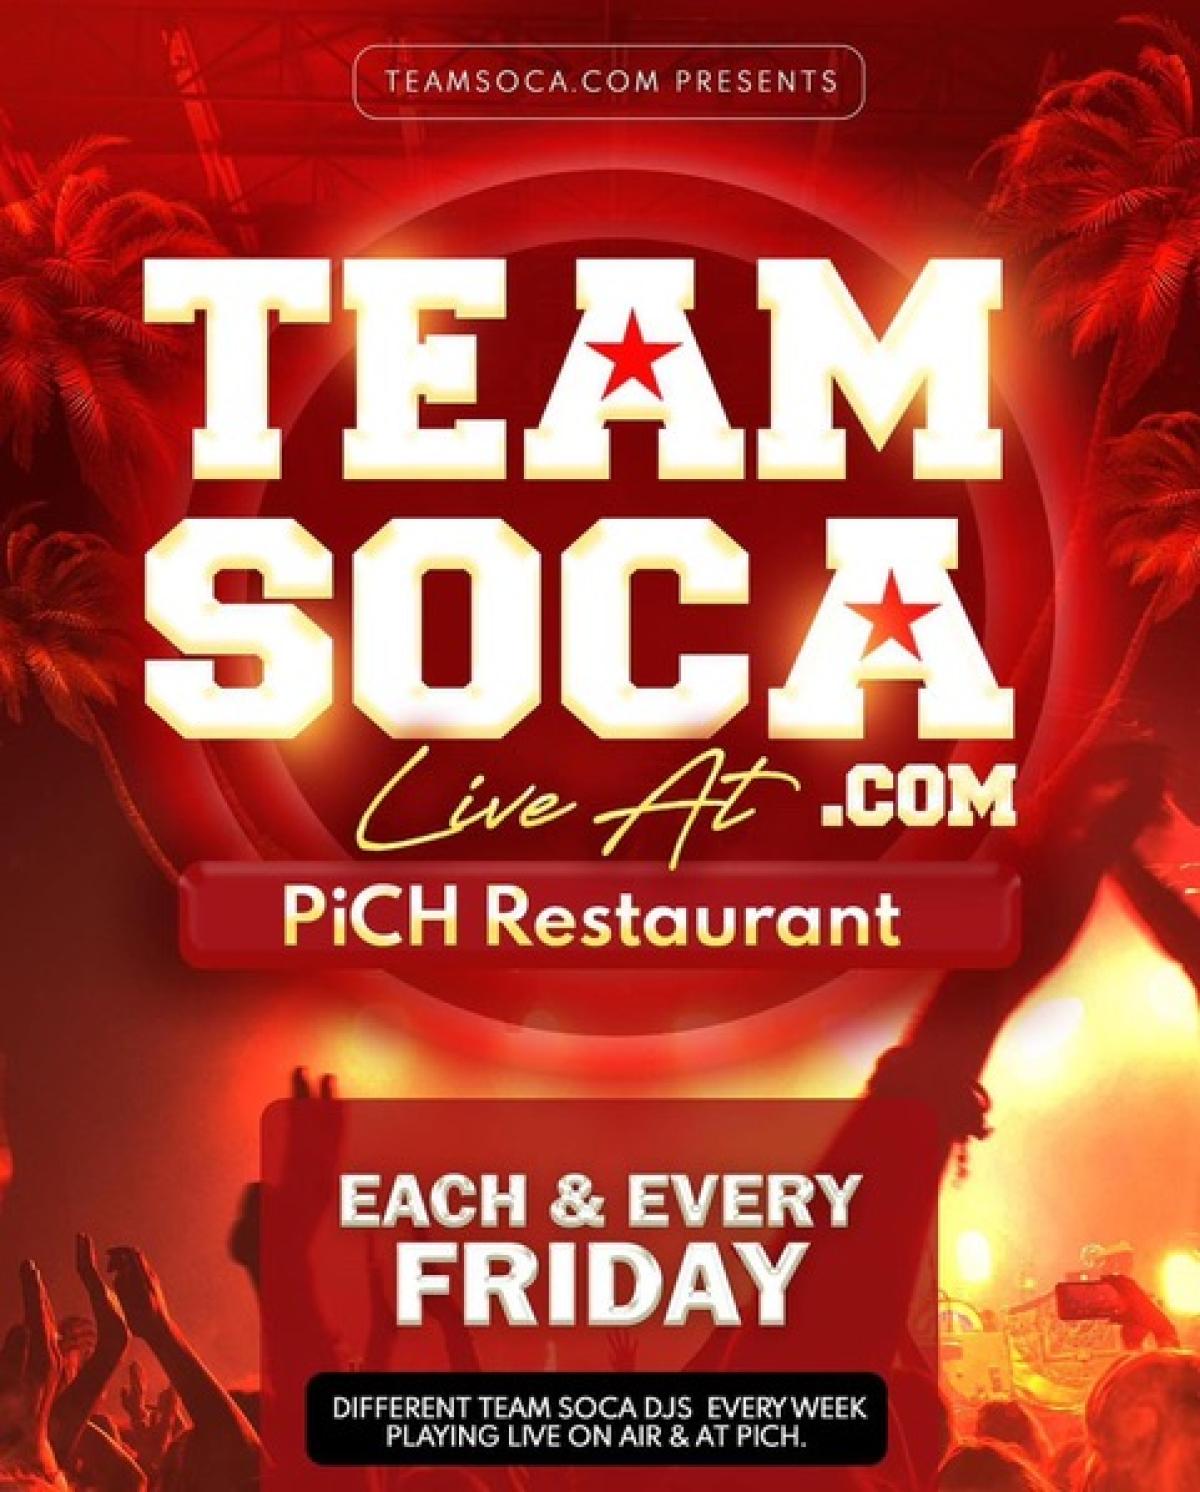 Team Soca Fridays  flyer or graphic.